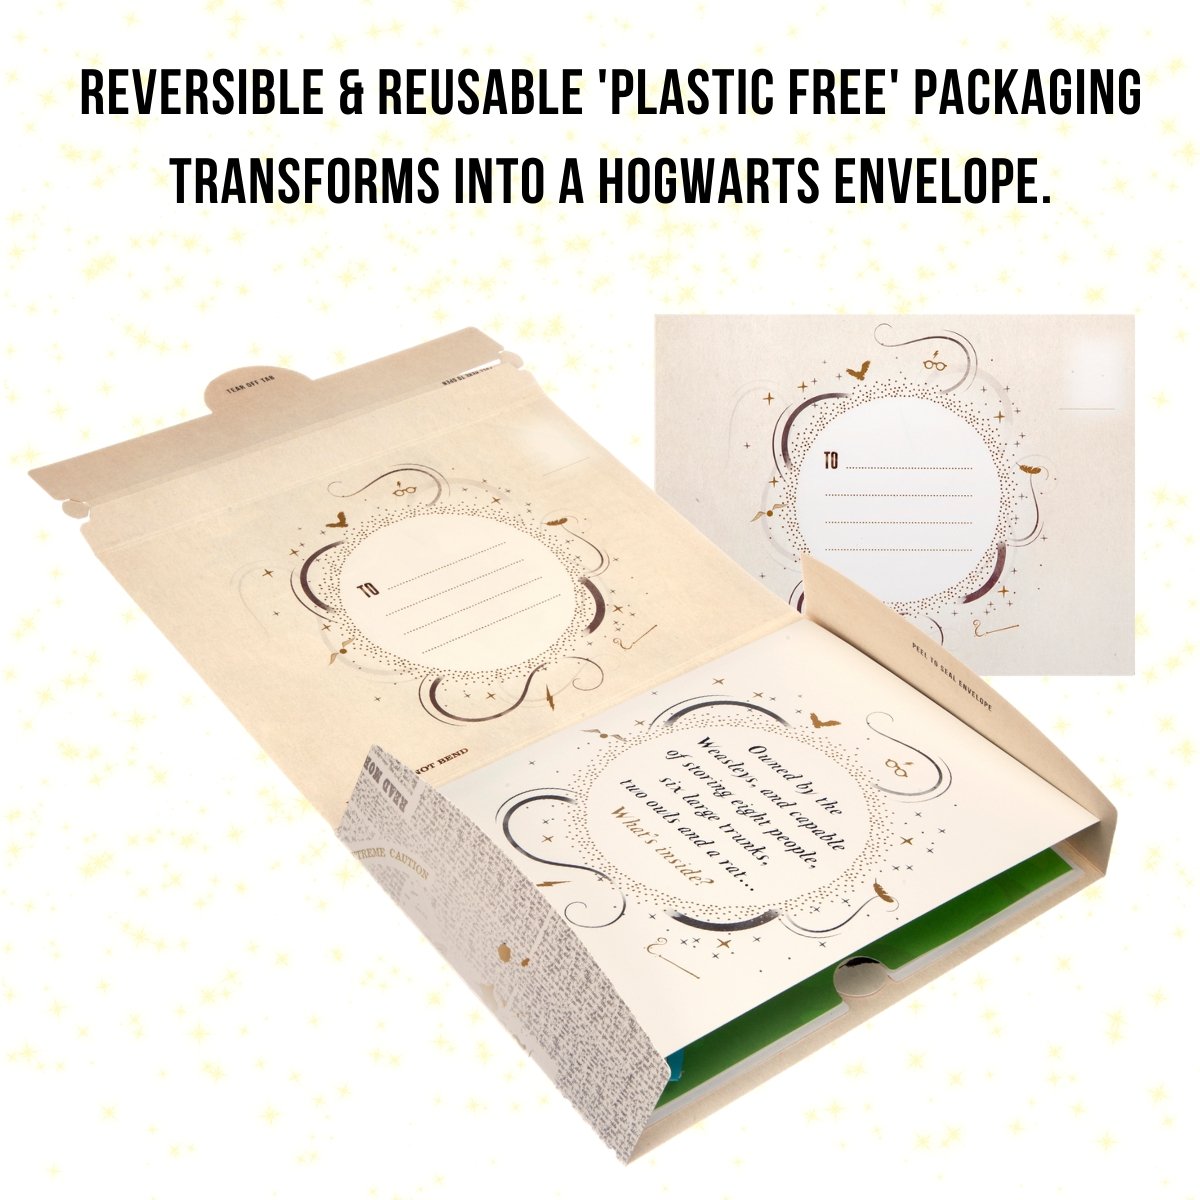 image of Harry Potter packaging reversing to become Hogwarts Envelope